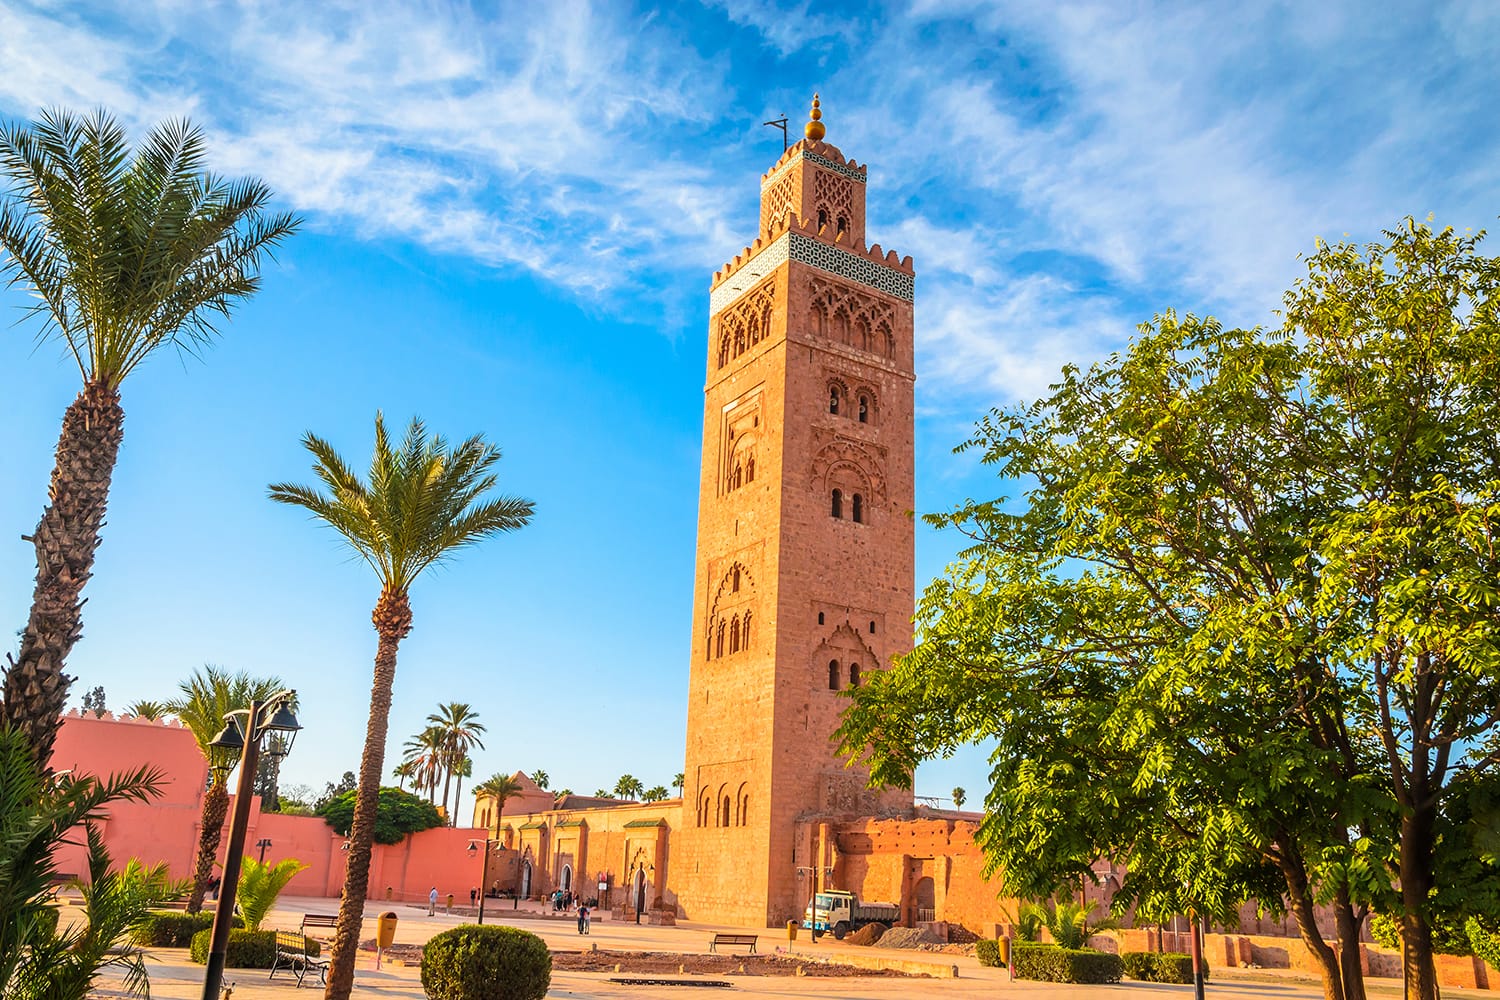 Koutoubia Mosque minaret in old medina of Marrakech, Morocco